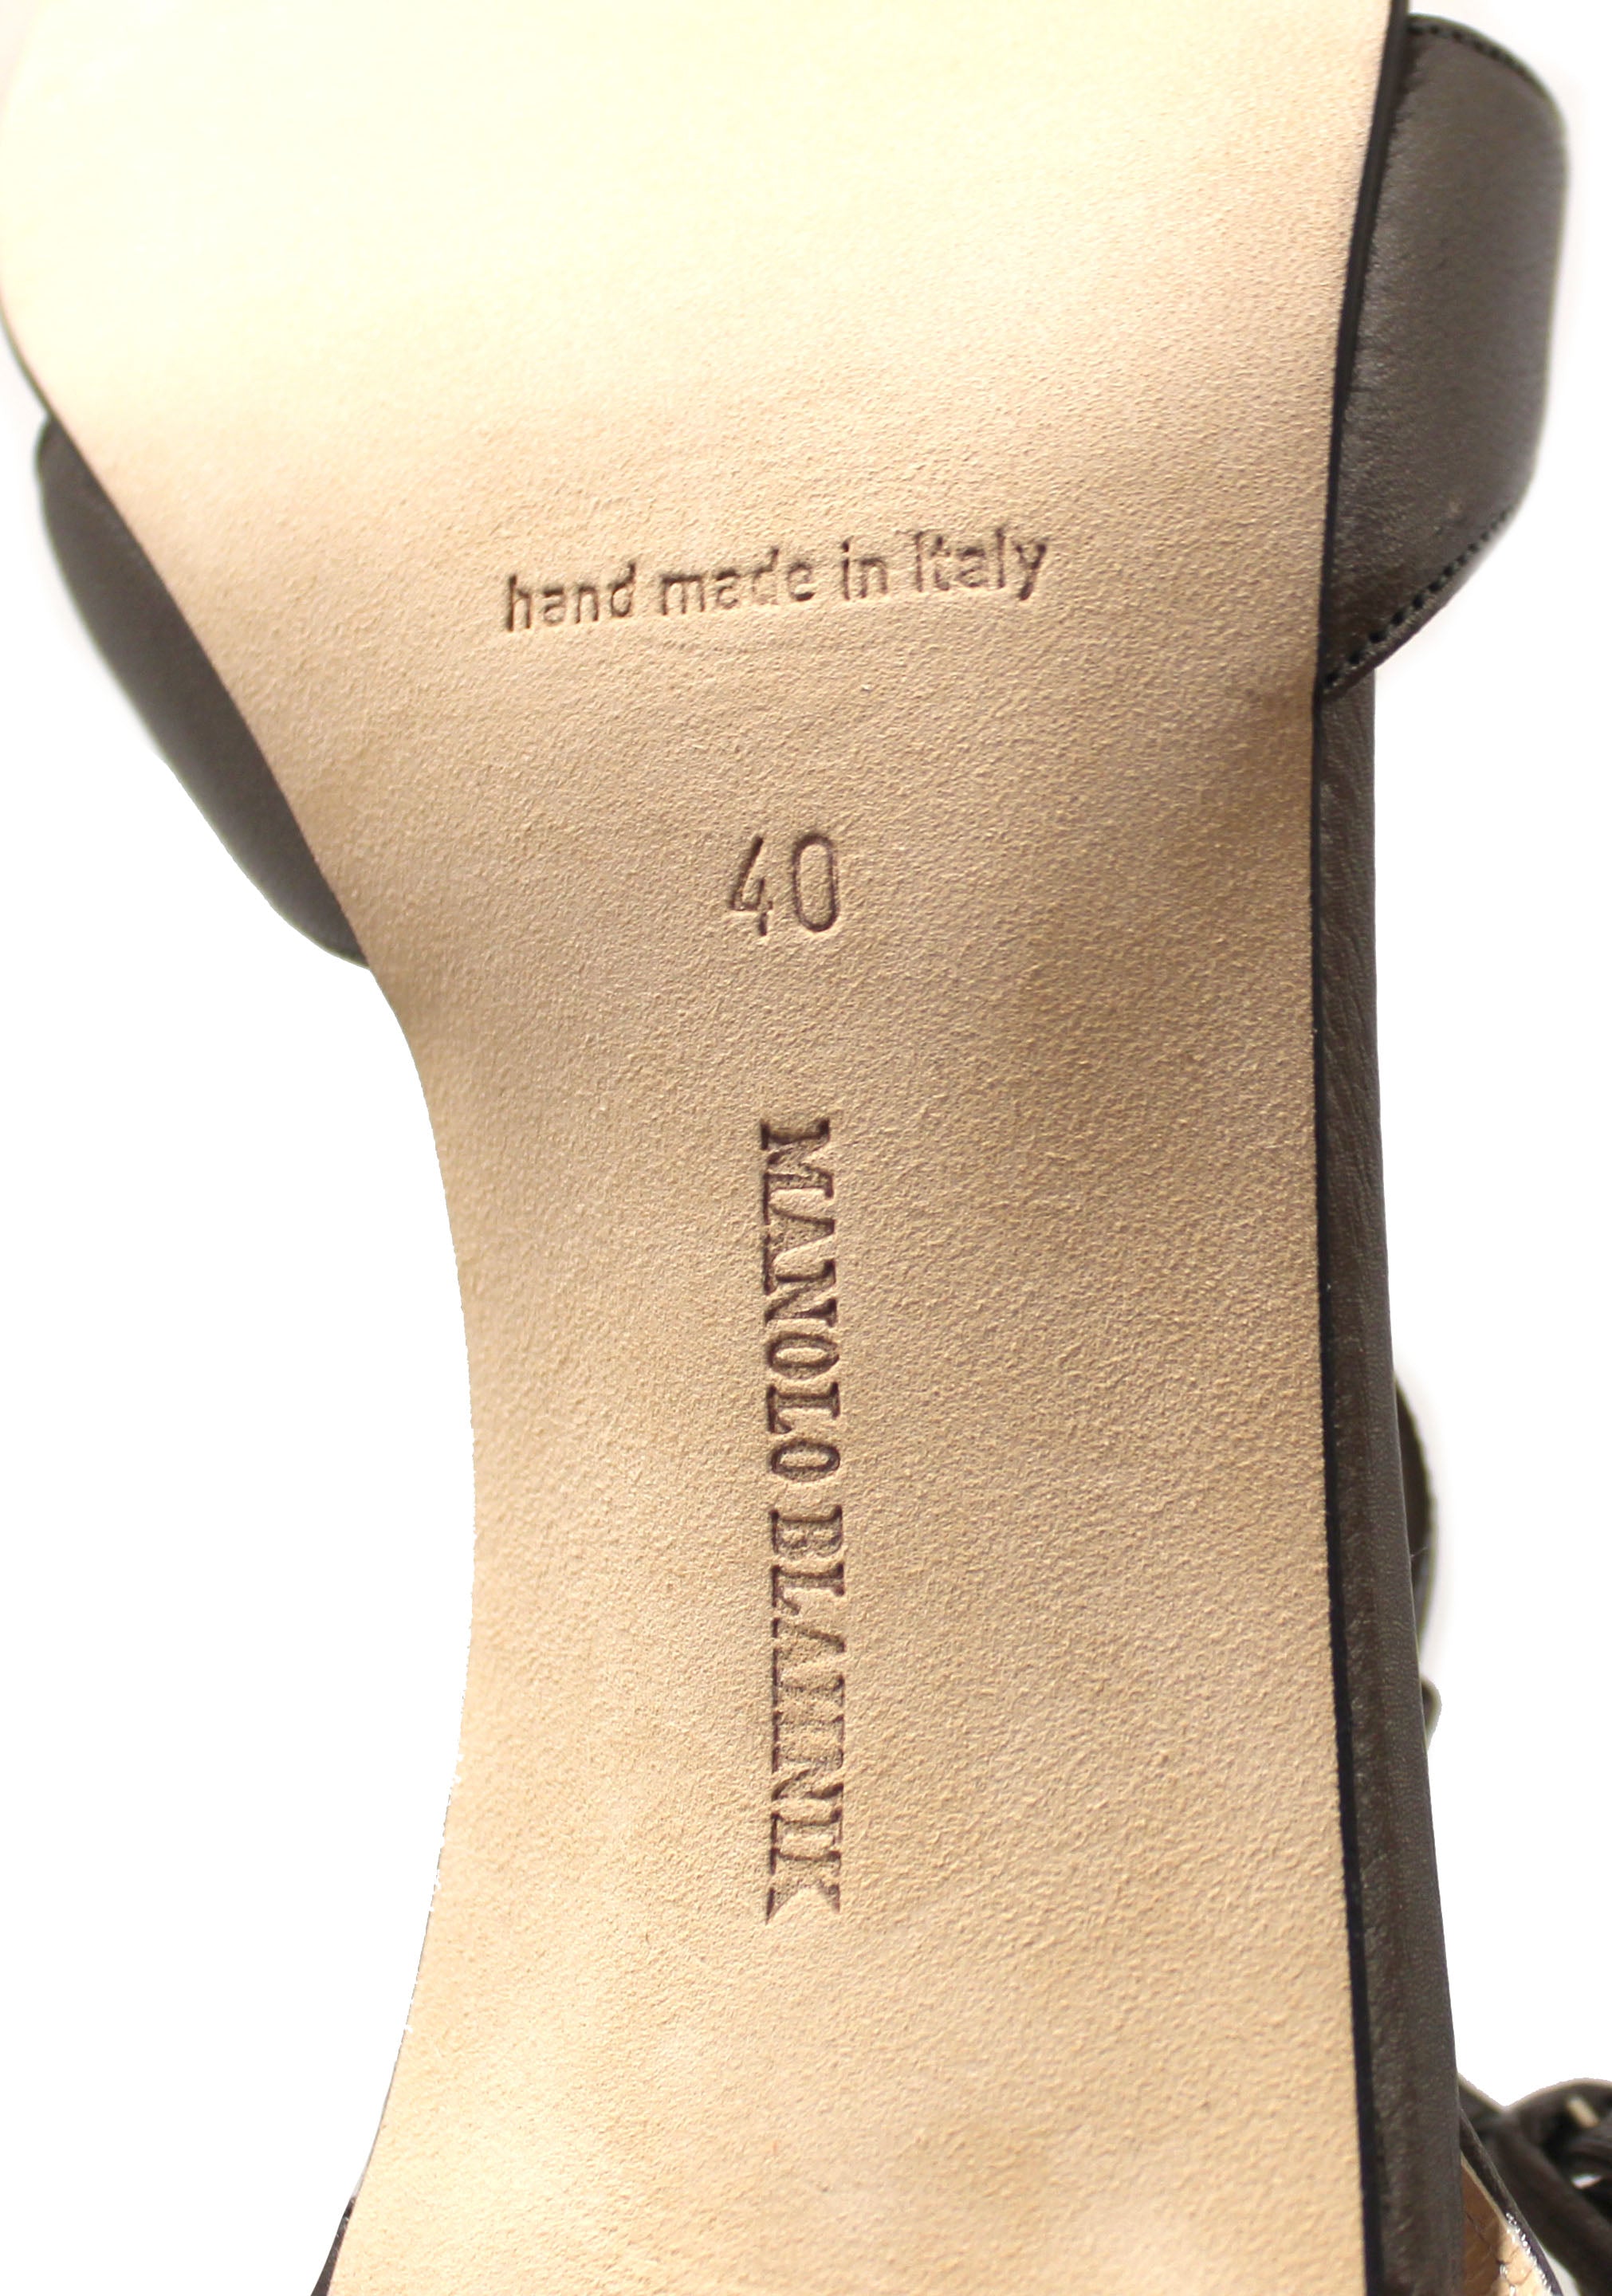 Authentic Manolo Blahnik Silver Leather Antonella Slingback Heels Size 40